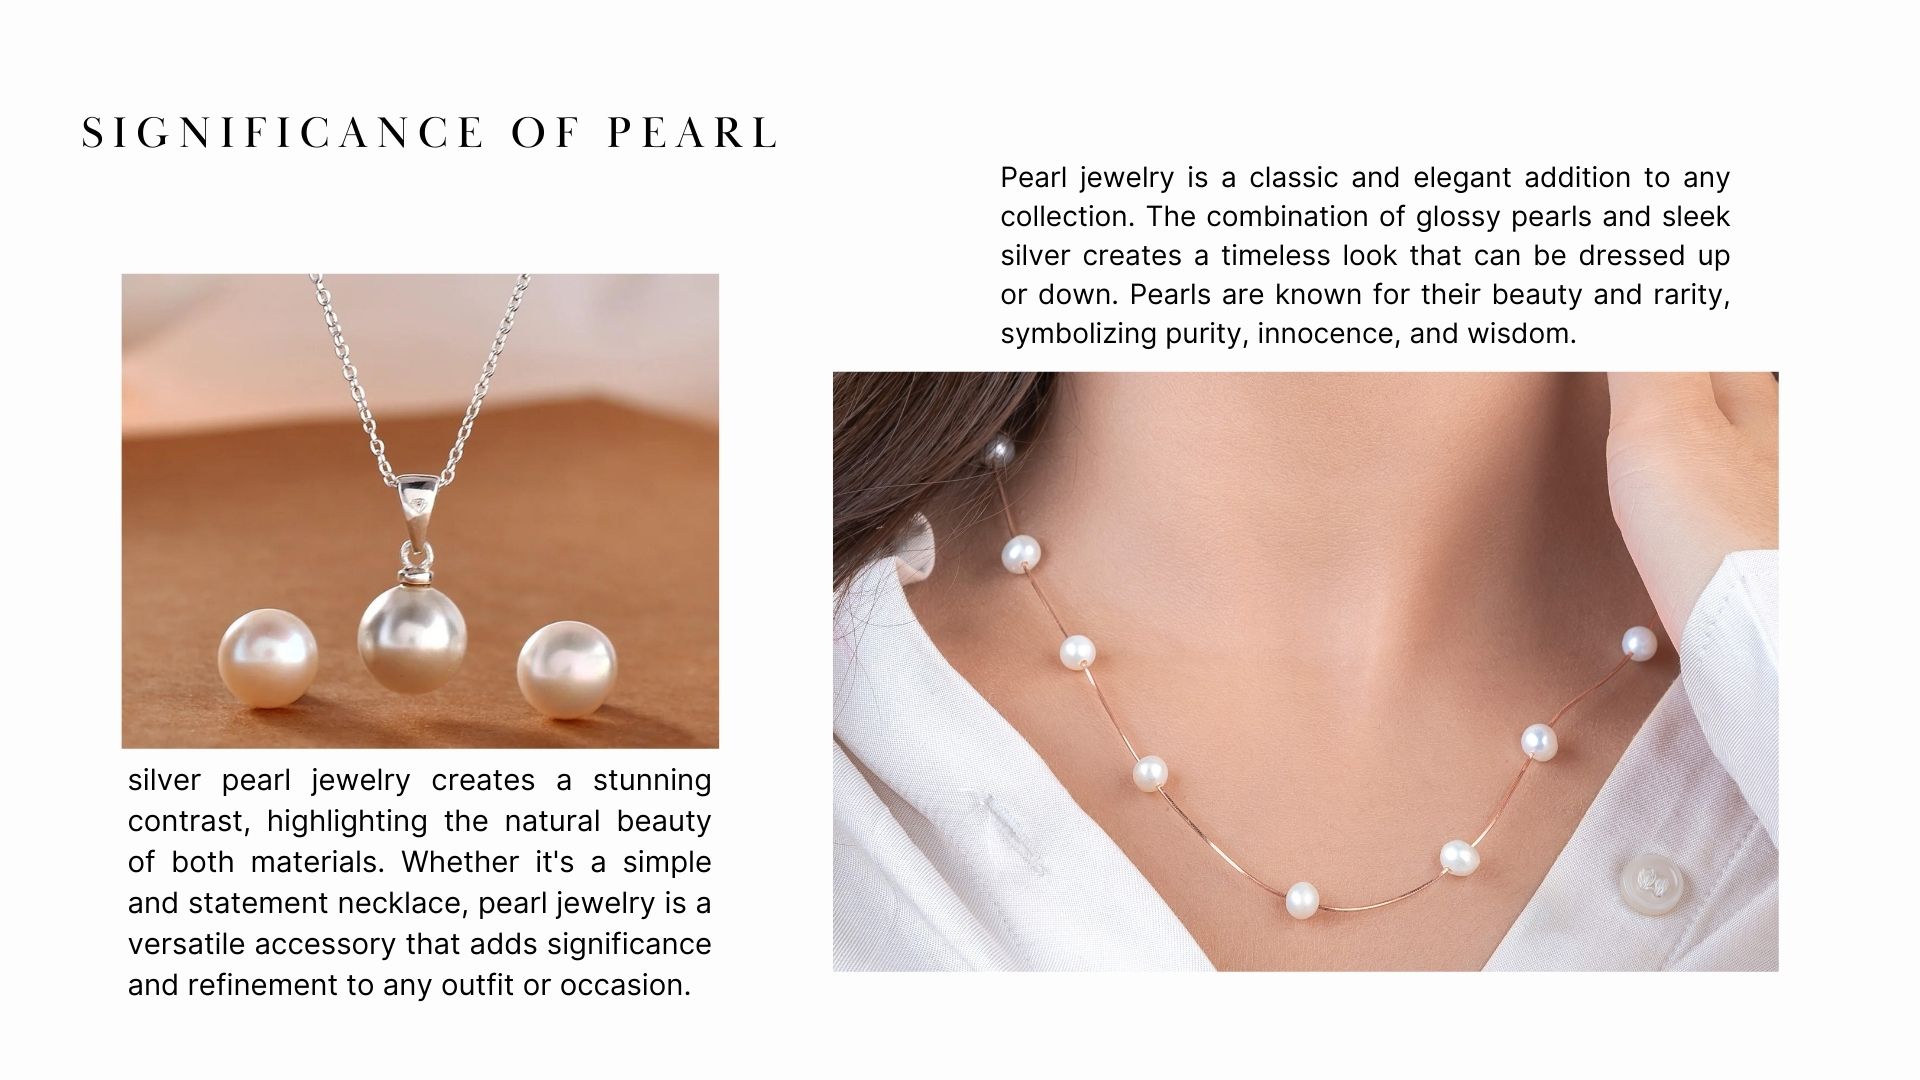 , pearl ring, pearl earring, pearl pendant, pearl earrings, pearl earring lady, pearl earrings drop, pearl earring drop, pearl necklace real, pearl ring engagement, pearl earrings stud, pearl earring hoops, pearl necklace choker, pearl necklace gold, pearl necklace meaning, pearl necklace with gold, pearl earrings real, pearl necklace in gold, pearl necklace men, pearl necklace women, pearl ring diamond, pearl earring dior, pearl necklace for men, pearl earrings dangle, pearl earring for wedding, pearl earring in gold, pearl earrings tiffany, pearl earring bridal, pearl earrings wedding, pearl earrings and necklace set, pearl earring mikimoto, pearl earring with bow, pearl necklace long, pearl ring black, pearl earrings silver, pearl necklace vivienne westwood, pearl earrings tahitian, pearl necklace zz, pearl necklace lyrics, pearl ring vintage, pearl earring clip on, pearl earring long, pearl earring painter, pearl earrings david yurman, pearl necklace layered, pearl ring for man, pearl ring man, pearl earrings costco, pearl pendant necklace gold, pearl necklaces for women, pearl necklace for wedding, pearl necklace for dogs, pearl necklace gold chain, pearl ring white gold, pearl ring pandora, pearl ring david yurman, pear ring experiment, pearl ring with emeralds, pearl earrings gold, pearl earring artist, pearl necklace 14k gold, pearl necklace 3 strand, pearl necklace amazon, pearl ring tiffany, pearl nose ring, pearl ruby ring, pearl earring cuff, pearl emerald earrings, pearl earring for women, pearl earrings rose gold, pearl earrings tory burch, pearl earring with diamond stud, pearl necklace india, pearl necklace indian, pearl necklace kay jewelers, pearl necklace with planet, pearl ring band, pearl ring rose gold, pearl ring sterling silver, pearl engagement ring vintage, pearl bridesmaid earrings, pearl earrings in white gold, pearl pendant gold, pearl necklace etsy, pearl necklace kate spade, pearl necklace price, pearl necklace pandora, pearl necklace zales, pearl ring 14k gold, pearl ring cluster, pearl eternity ring, pearl ring gold 14k, pearl navel ring, pearl earrings near me, pearl earrings with diamonds, pearl earring size chart, pearl earrings long drop, pearl earrings natural, pearl earring pandora, pearl necklace 16 inch, pearl necklace for sale, pearl pendant in gold, pearl necklace meaning to a guy, pearl ring james avery, pearl ring mikimoto, gold pearl ring vintage, pearl earrings kay jewelers, pearl earrings on amazon, pearl earring screw back, pearl earrings zales, pearl pendant cage, pearl pendant diamond, pearl necklace hawaii, pearl necklace japan, pearl necklace james avery, pearl necklace kit, pearl necklace outfit, pearl necklace unique, pearl necklace value, pearl necklace zz top meaning, pearl napkin rings, pearl ring macy's, pearl ring wedding set, pearl earrings amazon, pearl earrings 4mm, pearl earrings 8mm, pearl earrings james avery, pearl earrings kohls, x earring, pearl necklace 18 inch, pearl necklace 20 inch, pearl necklace 6mm, pearl pendant choker, pearl necklace cost, pearl necklace designs, pearl necklace gif, pearl necklace jcpenney, pearl necklace knots, pearl necklace png, three pearl ring, pearl key ring, pearl ring yellow gold, pearl earring backs, pearl earring johannes vermeer, pearl earrings j crew, pearl earring man, pearl necklace 1920s, pearl necklace 18, pearl necklace 8mm, pearl necklace extender, pearl necklace jewelry, pearl necklace jared, kohl's pearl necklace, pearl pendant silver necklace, pearl necklace target, zara pearl necklace, pearl ring etsy, pearl ring simple, pearl ring sale, pearl ring zales, pearl earring front and back, pearl earrings nordstrom, pearl earrings target, pearl earring vermeer, pearl earring with pearl back, pearl earrings yellow gold, pearl necklace 5mm, pearl necklace images, pearl necklace lengths, pearl necklace on men, pearl ring amazon, mikimoto pearl ring vintage, pearl ring with halo, pearl earring sale, pearl earrings 5mm, pearl earrings 9mm, pearl earrings jared, pearl earring with diamond halo, pearl necklace 14 inch, pearl necklace 24 inch, pearl necklace 2 strand, pearl necklace drawing, pearl pendant for men, pearl pendant mikimoto, pearl necklace urban outfitters, pearl ring box, pearl ring costco, pearl ring with gold band, pearl earring charms, pearl earrings 18k gold, pearl earring bracelet set, pearl drop earrings etsy, pearl earrings hawaii, pearl earrings necklace and bracelet set, yellow pearl earring, pearl pendant silver, pearl necklace 1950s, pearl necklace 14k gold clasp, pearl necklace 22 inch, pearl necklace guys, pearl necklace kit with oyster, pearl necklace video, pearl necklace yellow gold, pearl ring 18k gold, pearl ring set, pearl ring gold band, pearl ring jared, pearl ring platinum, pearl earrings 14mm, pearl earrings 3mm, pearl earring with gold, pearl earring diy, pearl earrings ebay, pearl earrings elegant, pearl earrings japanese, pearl earrings qvc, honora pearl earrings qvc, pearl pendant necklace white gold, pearl necklace ideas, pearl necklace outfit ideas, pearl necklace original, pearl necklace on guys, pearl necklace repair, pearl necklace restringing, pearl teardrop pendant, pearl necklace trend, pearl necklace tattoo, pearl and diamond ring yellow gold, pearl stud earrings 8mm, pearl earrings india, pearl earring jackets for diamond studs, pearl earrings japan, pearl earrings nordstrom rack, pearl earrings round, pearl drop earrings yellow gold, pearl pendant earrings, pearl pendant white gold, pearl pendant resident evil 4, pearl pendant drop, pearl necklace designs in gold, pearl pendant enhancer, pearl necklace kendra scott, pearl necklace repair near me, pearl ring cheap, pearl rings kays, pearl earring stack, pearl earrings 11mm, mikimoto pearl earrings 7mm, pearl earring big, pearl earrings jewellery, pearl earrings jcpenney, pearl earring macy's, pearl earring women, pearl necklace 925, pearl cage pendant gold, pearl necklace hyderabad, pearl necklace handmade, pearl necklace joke, pearl necklace lyrics meaning, pearl ring 14k white gold, mabe pearl ring 14k gold, pearl ring size 10, pearl inlay ring, pearl ring ebay, pearl engagement ring meaning, pearl ring kay jewelers, kohl's pearl ring, pearl napkin ring, quahog pearl ring, pearl ring surrounded by diamonds, pearl ring value, pearl ring with diamond band, pearl earring set of 3, pearl stud earrings 7mm, pearl earring crawlers, pearl earring hanging, pearl earring pack, pearl earring studs 10mm, pearl pendant re4, pearl pendant earrings set, pearl flower pendant, pearl pendant gold chain, pearl heart pendant, pearl necklace korean, pearl necklace on saree, pearl necklace pinterest, pearl pendant rose gold, pearl necklace rdr2, pearl pendant tiffany, pearl necklace transparent background, pearl necklace transparent, black pearl pendant yellow gold, pearl ring astrology, pearl ring design for women, pearl ring jewelry, pearl ring kendra scott, pearl ring mount, pearl ring swarovski, pearl ring with diamonds around it, pearl ring wedding, mabe pearl rings yellow gold, pearl earring movie, akoya pearl earrings 8mm, pearl earrings gold india, pearl earrings h&m, pearl earrings jhumka, pearl earrings kendra scott, pearl earring styles, pearl necklace 22k gold, pearl necklace 36, pearl necklace australia, pearl pendant necklace rose gold, pearl pendant designs in gold, pearl necklace emoji, pearl necklace outfit mens, pearl pendant pandora, pearl necklace quality, pearl pendant sterling silver, pearl necklace tanishq, pearl necklace tiktok, pearl pendant yellow gold, pearl ring size 4, pearl ring for ladies, pearl ring size 9, pearl ring enhancer, pearl ring earrings, pearl lip ring, best pearl ring, pearl rose ring, pearl ring with prongs, akoya pearl earrings 9mm, pearl earring chain, pearl earrings kultura, pearl earring outfits, pearl earring on ear, pearl earring png, pearl vine earrings, pearl leverback earrings yellow gold, pearl pendant charm, pearl necklace 18k gold, pearl necklace 30, pearl necklace value calculator, pearl pendant with chain, pearl ring size 11, pearl ring size 5, pearl ring dainty, pearl ring dating, pearl ring in silver for men, pearl ring setting only, mikimoto pearl ring value, pearl ring with two diamonds, zendaya pearl ring, pearl earring size on ear, mikimoto pearl earrings 6mm, mikimoto pearl earrings 8mm, pearl earring earbuds, pearl earring headphones, pearl earrings hyderabad, pearl earring images, pearl earrings nearby, pearl earring painting acnh, pearl earrings tanishq, pearl pendant necklace and earring set, pearl necklace 2023, pearl necklace 3 layers, pearl necklace 4mm, pearl pendant designs, pearl pendants for sale, pearl gold pendant set designs, pearl necklace gay, pearl pendant holder, pearl necklace h&m, pearl necklace harry styles, pearl necklace online, pearl pendant re4 remake, pearl necklace restringing near me, pearl necklace real cost, pearl necklace usa, pearl necklace under 100, pearl necklace vivienne westwood gold, pearl necklace y2k, pearl pendant necklace yellow gold, pearl necklace zz top live, pearl ring size 6, pearl ring broome, pearl ring care, pearl ring costume jewelry, pearl ring holder, pearl ring images, pearl nose ring stud, pearl ring prong setting, pearl ring silver band, pearl earrings 7mm, pearl earrings artificial, pearl earring design ideas, pearl earring findings, pearl earrings handmade, pearl earring meaning, pearl earring mountings, pearl earring portrait, pearl earrings uk, pearl pendant amazon, pearl necklace double meaning, pearl necklace history, pearl necklace qatar, pearl ring for little finger, pearl ring for women gold, pearl ring for men gold, pearl ring for women silver, 9ct pearl ring, pearl ring benefits for male, pearl ring bracelet, pearl ring canada, pearl ring cartier, pearl ring design for female in gold, pearl ring design for female in silver, pearl ring design in silver, pearl ring design for men, pearl ring london, pearl ring on hand, pearl ring price in pakistan, pearl ring to be worn in which finger, pearl ring to wear in which finger, black pearl ring uk, black pearl ring value, pearl earrings 2023, pearl earrings benefits, pearl earrings adelaide, pearl earrings hong kong, pearl earrings kalyan jewellers, pearl earrings like kate middleton, pearl earrings prouds, pearl earrings qatar, pearl earrings river island, pearl necklace 3mm, pearl pendant necklace men, pearl pendant near me, pearl pendant brooch, pearl pendant chain, pearl pendant for women, pearl gold pendant set, pearl necklace in gold design, pearl necklace joyalukkas, pearl necklace kenya, pearl lakshmi pendant designs, pearl moon pendant, pearl mesh pendant, pearl pendant price in sri lanka, pearl necklace price in bd, pearl necklace perth, pearl necklace thailand, pearl pendant uk, pearl necklace uk, pearl necklace uae, pearl necklace vancouver, pearl ring 10k, pearl ring 10 mm, pearl ring 18ct, pearl ring 15mm, pearl ring 1920s, pearl ring 18mm, pearl ring 1980s, pearl ring 14k silver, pearl ring 1stdibs, pearl rings 200, pearl 2 ring, pearl ring two, pearl ring with 2 diamonds, pearl ring size 22, gold pearl ring 2nd hand, pearl two ring set, 2 pearl ring black and white, $20 pearl ring, 2 pearl ring cheap, pearl ring 3d, pearl ring $30, pearl 3 ring, pearls 3 ring binder, pearl ring for 30th wedding anniversary, 3 pearl ring meaning, 3 pearl gold ring, pearl ring for women which finger, pearl ring for women benefits, pearl ring for girl, pearl ring for men benefits, pearl ring under 5000, david yurman pearl ring 5, 5mm pearl ring, paldesse silver pearl ring 6mm, 6mm pearl ring size, honora pearl ring size 6, yurman pearl ring size 6, blister pearl ring size 6, cultured pearl ring size 6, 60's pearl ring, pearl ring 8mm, cultured pearl ring size 8, pandora pearl ring size 8, pearl ring 9ct gold, pearl ring 9mm, pearl rings 925, cultured pearl ring size 9, pearl ring p99, pearl ring as engagement ring, pearl ring all around, pearl ring adjustable, pearl ring american swiss, pearl ring adelaide, pearl ring as per astrology, pearl ring beaded, pearl ring bezel, pearl ring benefits for female in hindi, pearl ring big, pearl ring benefits in hindi, pearl ring brisbane, pearl ring browns, pearl ring bomb, pearl ring catbird, pearl ring clipart, pearl ring cute, pearl ring caratlane, pearl ring cough tea, pearl ring chandrani pearls, pearl ring cost in india, pearl ring drawing, pearl ring everyday wear, pearl ring elastic, pearl ring effect, pearl ring expensive, pearl ring ernest jones, pearl ring earrings necklace set, pearl ring earring silver, pearl ring from princess and the frog, pearl ring fizzies, pearl ring ffxiv, pearl ring for men which finger, pearl ring guard, pearl ring gold for women, pearl ring goldmark, pearl ring girl, pearl ring gold tiffany, pearl ring grt, pearl ring goldsmiths, pearl ring gold uk, pearl ring gold cost, pearl ring gemstone benefits, pearl ring hawaii, pearl ring how to wear, pearl ring hong kong, pearl ring hindu, pearl ring hand, pearl ring hand crafted, pearl ring hand sanitizer, pearl ring hobart, pearl ring hermes, pearl ring hand bracelet, pearl ring hd wallpaper, pearl ring in dream meaning, pearl ring index finger, pearl ring in silver for women, pearl ring in little finger, pearl ring joena san diego, pearl ring jtv, pearl ring jhumka, pearl ring warren james, pearl ring david jones, pearl ring korean style, pearl ring kmart, pearl ring korean, pearl ring korea, pearl kinetic ring, pearl knuckle ring set, pearl kids rings, pearl ring ladies, pearl ring large, pearl ring luxury, pearl ring ladies gold, pearl ring leaf, pearl ring lotus, pearl ring lahore, pearl ring link bracelet, pearl rings las vegas, pearl lace ring, pearl lane ring, pearl ring madewell, pearl ring michael hill, pearl ring malabar gold, pearl ring monica vinader, pearl ring nearby, pearl ring nordstrom, pearl ring new york, pearl rings newcastle, pearl rings nottingham, pearl necklace ring, pearl nose ring white gold, pearl ring open, pearl ring old navy, pearl ring on left hand, pearl ring original, pearl ring on middle finger, pearl ring on right hand, pearl ring original silver, pearl ring on sale, pearl ring oval, pearl ring online sterling silver, pearl ring princess and the frog, pearl ring price in nepal, pearl ring paspaley, pearl ring qatar, pearl quartz ring, pearl ring size q, pearl rings on qvc, quince pearl ring, quality pearl ring, black pearl ring titan quest, pearl ring roundabout, pearl ring roundabout in beijing china, pearl ring roundabout in beijing, pearl ring rashi which stone to wear in which finger, pearl ring rarotonga, pearl round ring, pearl ring stack, pearl ring tiny rogues, pearl ring thick band, pearl ring to be worn on which day, pearl ring touch skin, pearl ring the bay, pearl ring toronto, pearl ring usa, pearl ring uk shop, pearl rings uk gold, pearl urn ring, pearl unique ring designs, vintage pearl ring uk, silver pearl ring unique, real pearl ring uk, pearl ring vietnam, pearl ring vidhi, pearl ring vedic astrology, pearl ring vintage white gold, pearl ring victorian, ruby pearl ring victorian, pearl ring with initial, pearl ring ysl, pearl ring yellow, pearl ring yin yang, pearl engagement ring yellow gold, two pearl ring yellow gold, natural pearl ring yellow gold, pearl ring zamels, pearl ring for cancer zodiac, pearl and zircon ring, double pearl zara ring, mother of pearl zodiac ring, pearl earring 14k gold, pearl earring 12mm, pearl earring 10mm, pearl earring 18k, pearl earring 18k white gold, pearl earrings 14k gold post, pearl earrings 13mm, pearl earrings 18ct gold, pearl earrings 16mm, pearl earrings 10k white gold, pearl earrings 18mm, pearl earrings 22 carat, pearl earrings 2024, pearl earrings 22k, pearl earrings 2g, chanel pearl earrings 2023, pearl drop earrings 22k, pearl stud earrings 2, girl with pearl earring 2003, girl with a pearl earring 2003 cast, girl with a pearl earring 2003 ok.ru, girl with a pearl earring 2004, girl with a pearl earring 2003 film, 2mm pearl earring, 24k pearl earring, pearl earrings 30th anniversary, pearl earrings 3, pearl 3d earrings, girl with pearl earring 3d, pearl stud earrings 4mm, gold pearl earrings 4mm, girl with a pearl earring 4k, pearl earrings under 5000, pearl earring 6mm, pearl stud earring 6mm, freshwater pearl earrings 6mm, pearl earrings gold 6mm, silver pearl earrings 6mm, cultured pearl earrings 6mm, freshwater pearl earrings 7mm, cultured pearl earrings 7mm, majorica pearl earrings 8mm, tahitian pearl earrings 8mm, cultured pearl earrings 8mm, pearl clip earrings 80s, pearl earrings 9mm 14k, pearl 9 earrings, pearl drop earrings 9ct gold, freshwater pearl earrings 925 silver, pearl drop earrings 9mm, freshwater pearl earrings 9ct, pink pearl earrings 9mm, freshwater pearl earrings 925, pearl dangle earrings 9mm, pearl earring animal crossing, pearl earring artwork, pearl earring brands, pearl earring band, pearl earring banksy, pearl earring bow, pearl earring baroque, pearl earring baby, pearl earring blue nile, pearl earring cluster, pearl earring combo, pearl earring cat, pearl earring cartilage, pearl earring came off post, pearl earring climbers, pearl earring cheap, pearl earring designs images, pearl earring drop gold, pearl earring dream meaning, pearl earring design gold, pearl earring enhancers, pearl earring etsy, pearl earrings everyday, pearl earrings evry jewels, pearl earrings enewton, pearl earrings queen elizabeth, pearl earrings brilliant earth, girl with a pearl earring elements of art, girl with the pearl earring essie davis, pearl earring fell off post, pearl earring for kids, pearl earring famous painting, pearl earring for baby, pearl earring freshwater, pearl earring for girls, pearl earring for man, pearl earring flower, pearl earring girl, pearl earring gold stud, pearl earring gold design, pearl earring gift, pearl earring girl movie, pearl earring gold drop, pearl earring gold hoop, pearl earrings gold sri lanka, pearl earrings gold pinterest, pearl earring huggies, pearl earring heavy, pearl earring hk, pearl earrings hashtags, pearl earring in spanish, pearl earring indian, pearl earring in a dream meaning, pearl earrings in style, pearl earrings in costco, pearl earring john lewis, pearl earrings jewellery quarter birmingham, pearl earrings jewellers, pearl earring kiss, pearl earring kiss lashes, pearl earring kids, pearl earring kate middleton, pearl earring kmart, pearl earring kate spade, pearl earrings kenya, pearl earrings kuwait, pearl earrings korea, pearl earring lashes, pearl earring large, pearl earring look, pearl earring london, pearl lakshmi earrings, pearl earrings luxury, pearl earrings large studs, pearl earrings louis vuitton, pearl earring miffy, pearl earring museum, pearl earring mejuri, pearl earring meaning spiritual, pearl earrings name, pearl earring new design, pearl earrings netherlands, pearl earring oakcha, pearl earring on men, pearl earring on sale, pearl earring on man, pearl earring on hoop, pearl earrings ootd, pearl earrings online sri lanka, pearl earrings on meesho, pearl earring perfume, pearl earring p99, pearl earring pendant, pearl earring painting location, pearl earring quotes, pearl earrings best quality, girl with pearl earring quilt, girl with a pearl earring quilt pattern, girl with a pearl earring quotes and page numbers, girl with a pearl earring questions and answers, girl with a pearl earring quizlet, girl with a pearl earring quiz, girl with a pearl earring qartulad, girl with a pearl earring quotes and analysis, pearl earrings real costco, pearl earrings real price, pearl earrings rate, pearl earring radar love, pearl earrings revolve, pearl earrings ralph lauren, pearl earrings roblox id, pearl earrings roblox, pearl earrings review, pearl earring smiski, pearl earring symbolism, pearl earring transparent, pearl earrings temu, pearl earrings titanium, pearl earrings that dangle, pearl earrings types, pearl earrings tiny, pearl earrings tj maxx, pearl earring top, pearl earrings unique, pearl earrings under 1000, pearl earrings uk gold, pearl earrings under 2000, pearl earrings uk shop, pearl earrings uk green, pearl umbrella earrings, dior pearl earrings uk, pearl earring vintage, pearl earrings vietnam, pearl earrings vogue, pearl earrings van cleef, pearl earrings victoria bc, pearl earrings vintage design, pearl earrings von maur, pearl earrings veil, pearl earrings v, pearl valentino earrings, pearl earring with chain, pearl earring with screw backs, pearl earring with silver, pearl earring with flower, pearl earring worth, pearl earring ysl, pearl earrings you can sleep in, pearl earrings yes, pearl drop earrings yellow, pearl crush yellow earring, girl with a pearl earring youtube, girl with a pearl earring year, girl with a pearl earring year painted, pearl earring zara, pearl earrings zalando, pearl earrings zamels, pearl earrings zirconia, pearl earrings zoe chicco, pearl zircon earrings, pearl drop earrings zara, pearl flower earrings zara, tiffany pearl earrings ziegfeld, mikimoto pearl earrings zales, pearl drop earrings zirconia, girl with a pearl earring zoom, pearl pendant 14k gold, pearl necklace 0, pearl pendant 18ct gold, pearl pendant 13mm, pearl pendant 10k white gold, pearl necklace 2024, pearl necklace 2nd hand, pearl necklace 2 rows, pearl necklace 25, pearl necklace 20 long, pearl necklace 25mm, pearl necklace 2002, pearl pendant 3d, pearl necklace 3 rows, pearl necklace 36 inches, pearl necklace 3 strand choker, pearl necklace 375, pearl necklace 38 inch, pearl necklace 40 cm, pearl necklace 45cm, pearl necklace 46cm, pearl necklace 48in, pearl pendant resident evil 4 remake, pearl 5mm pendant, pearl necklace 5e, pearl necklace 50cm, pearl necklace 50s, pearl necklace 55cm, pearl necklace 54 inch, pearl 5 necklace, pearl 6 pendant, pearl necklace 60s, pearl necklace 6.5mm, pearl necklace 69, pearl necklace 6.5, 6mm pearl pendant, pearl pendant 7mm, pearl necklace 750, pearl necklace 7.5, 750 pearl pendant, pearl pendant 8mm, pearl necklace 80s, pearl necklace 80cm, pearl necklace 8mm price, pearl necklace 8mm freshwater, pearl necklace 80 inch, pearl pendant necklace 8 mm, pearl pendant 9ct gold, pearl pendant 925, pearl pendant 9k gold, pearl pendant 9mm, pearl necklace 925 clasp, pearl necklace 9ct gold clasp, pearl necklace 9ct gold, 9k pearl pendant, pearl pendant astrology, pearl a pendant, pearl pendant necklace women, pearl pendant no chain, pearl pendant necklace nearby, pearl pendant benefits, pearl pendant costco, pearl pendant caratlane, pearl pendant cross, pearl pendant cluster, pearl coin pendant, pearl coral pendant, pearl conch pendant, pearl pendant design for men, pearl pendant design silver, pearl pendant diy, pearl pendant dark, pearl design pendant set, pearl pendant etsy, pearl pendant eagle, pearl pendant emerald, pearl elephant pendant, pearl egg pendant, pearl emerald pendant set, pearl enhancer pendant white gold, pearl eternity pendant, pearl pendant for girls, pearl pendant flat, pearl necklace for girls, pearl pendant genuine, pendant pearl grape, pearl necklace gay meaning, pearl pendant hoop, pearl halo pendant, pearl necklace haze piece, pearl necklace hashtags, pearl pendant ideas, pearl pendant indian designs, pearl pendant in, pearl pendant jewelry box, pearl jewellery pendant, pendant pearl jewellery set, pendant pearl jewelry, pearl korean pendant, pearl necklace kids, pearl pendant large, pearl pendant lamp, pearl pendant leather, pearl pendant long, pearl leaf pendant, pearl layered pendant, pearl pendant malabar gold, pearl pendant meesho, pearl pendant male, pearl morpho pendant, pearl pendant on gold chain, pearl pendant on chain, pearl pendant octopus, pearl necklace on meesho, pearl pendant pinterest, pearl necklace quote great gatsby, pearl necklace queer, pearl necklace q, pearl necklace quartzite, black pearl pendant titan quest, quality pearl pendant, pearl pendant rh, pearl round pendant, pearl rabbit pendant, pearl pendant singapore, pearl pendant silver chain, pearl pendant under 5000, pearl unique pendant, pearl necklace under 5000, pearl pendant vintage, pearl necklace vogue, pearl necklace v shape, pearl pendant with earrings, pearl pendant with stone, pearl pendant women, pearl pendant with ruby, pearl pendant with silver, making a pearl pendant, pearl necklace you can add to, pearl necklace y shape, pearl necklace yellow, pearl necklace yellowstone, pearl necklace y, pearl necklace york, pearl necklace yellow gold chain, pearl necklace yay, pearl necklace zz top meaning lyrics, pearl necklace zz top chords
